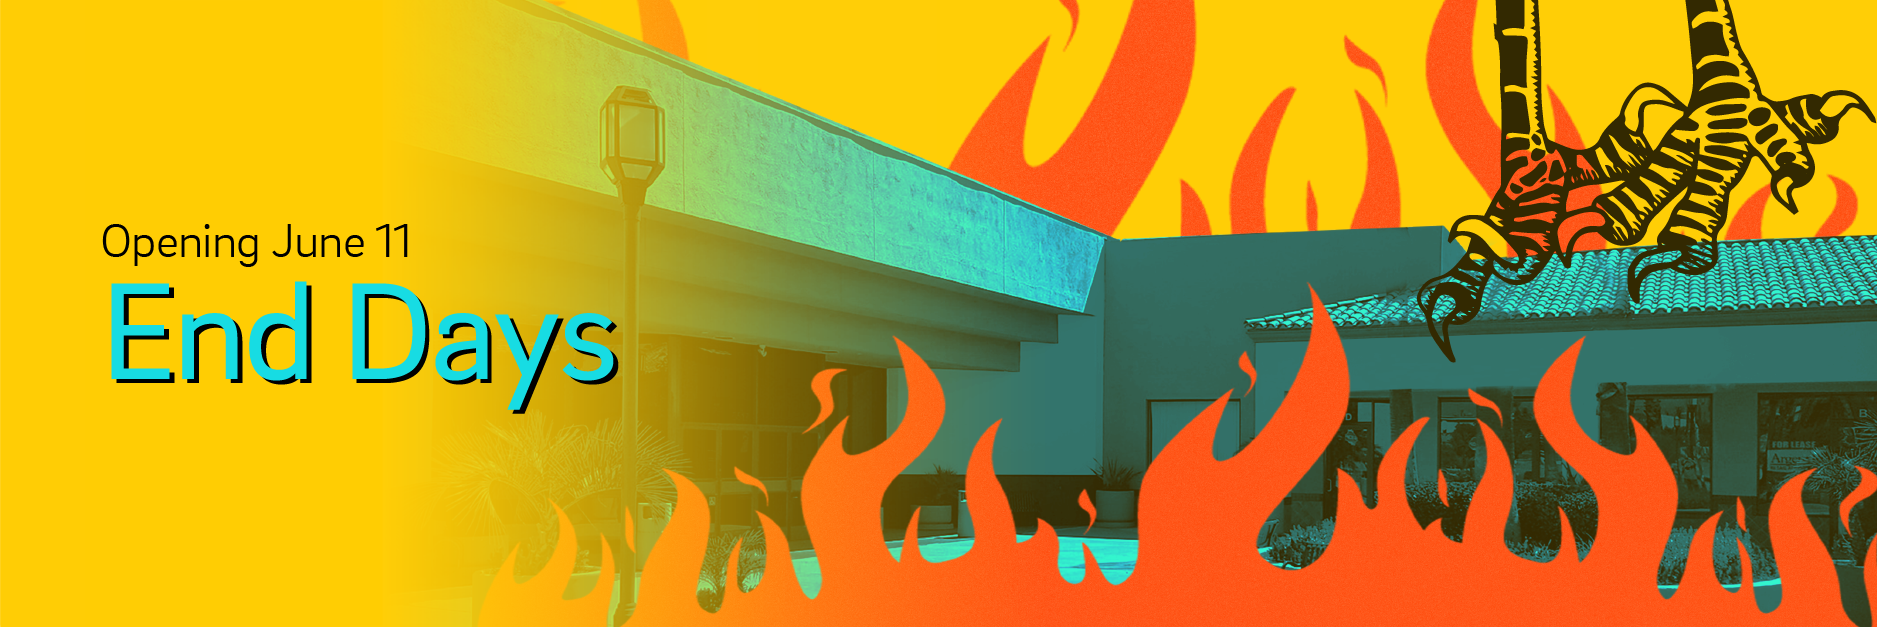 cartoon bird feet hover over a shopping mall on fire